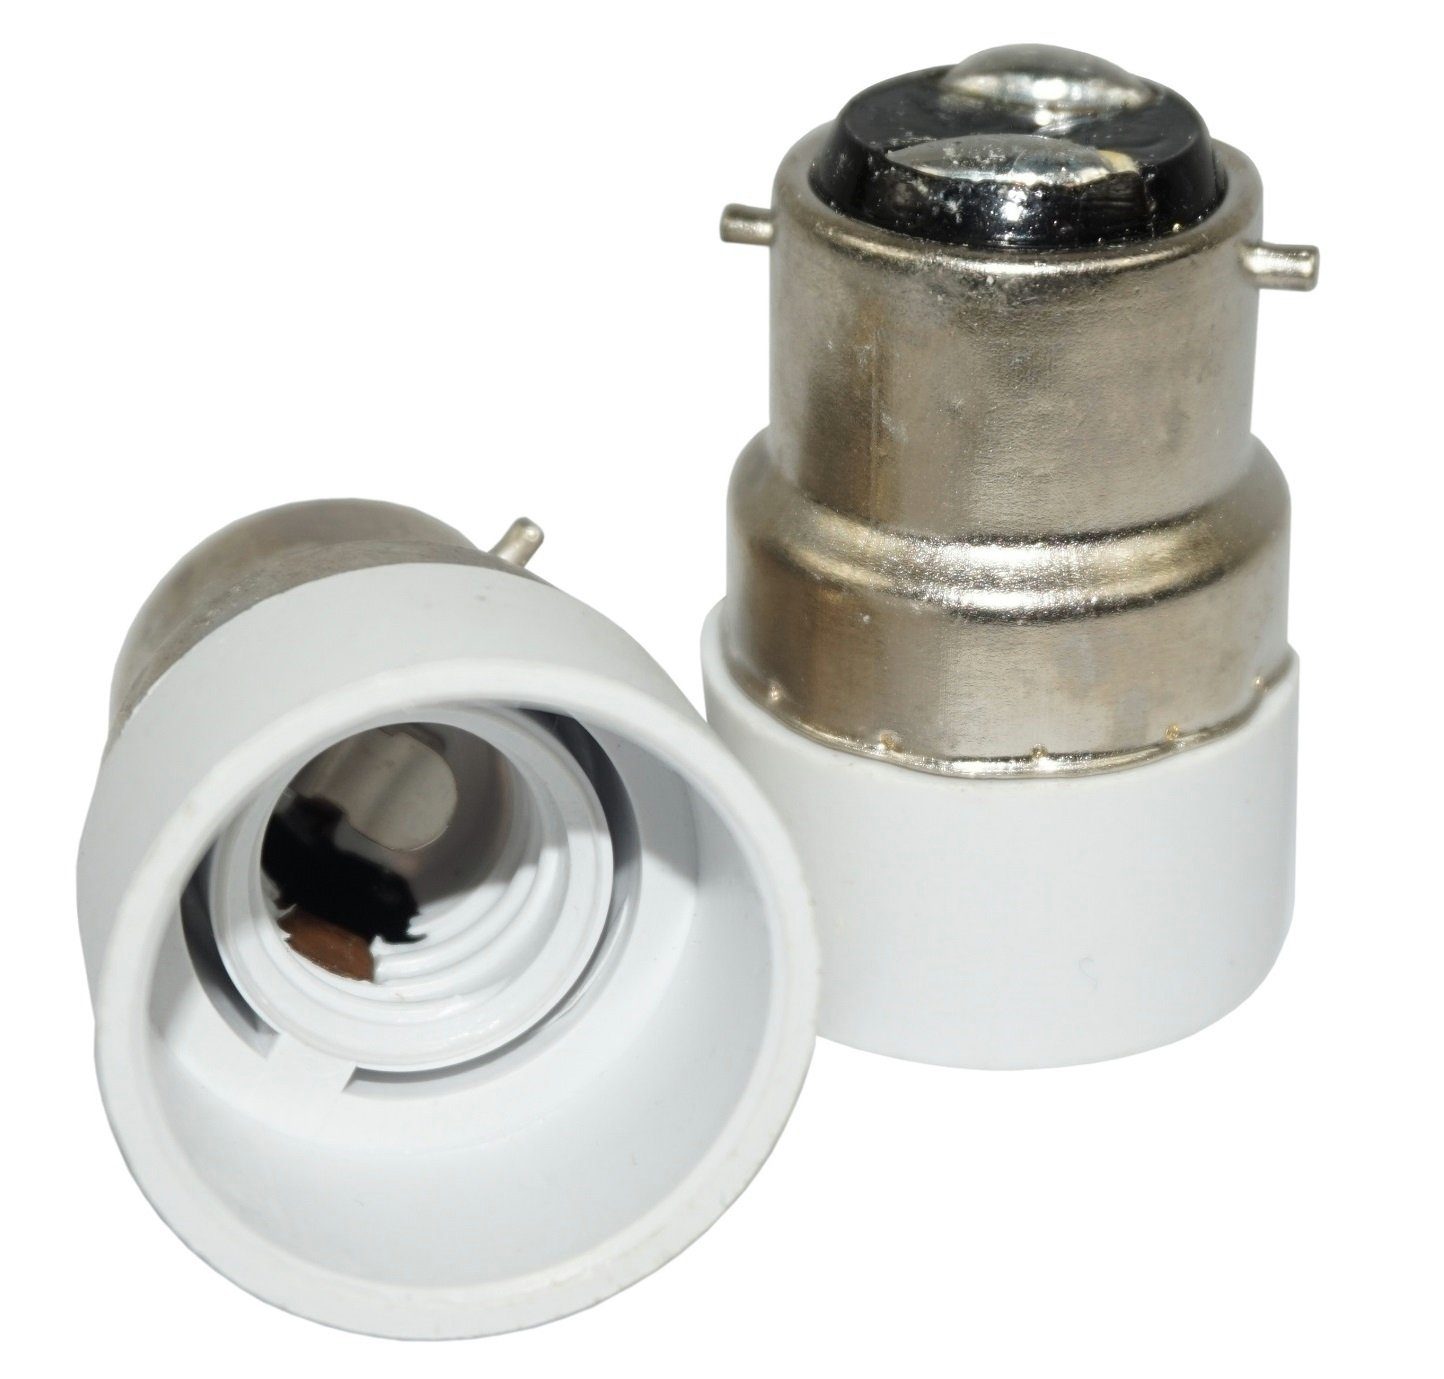 Sockeladapter Adapter auf B22 Provance Lampensockel Lampenfassung E14